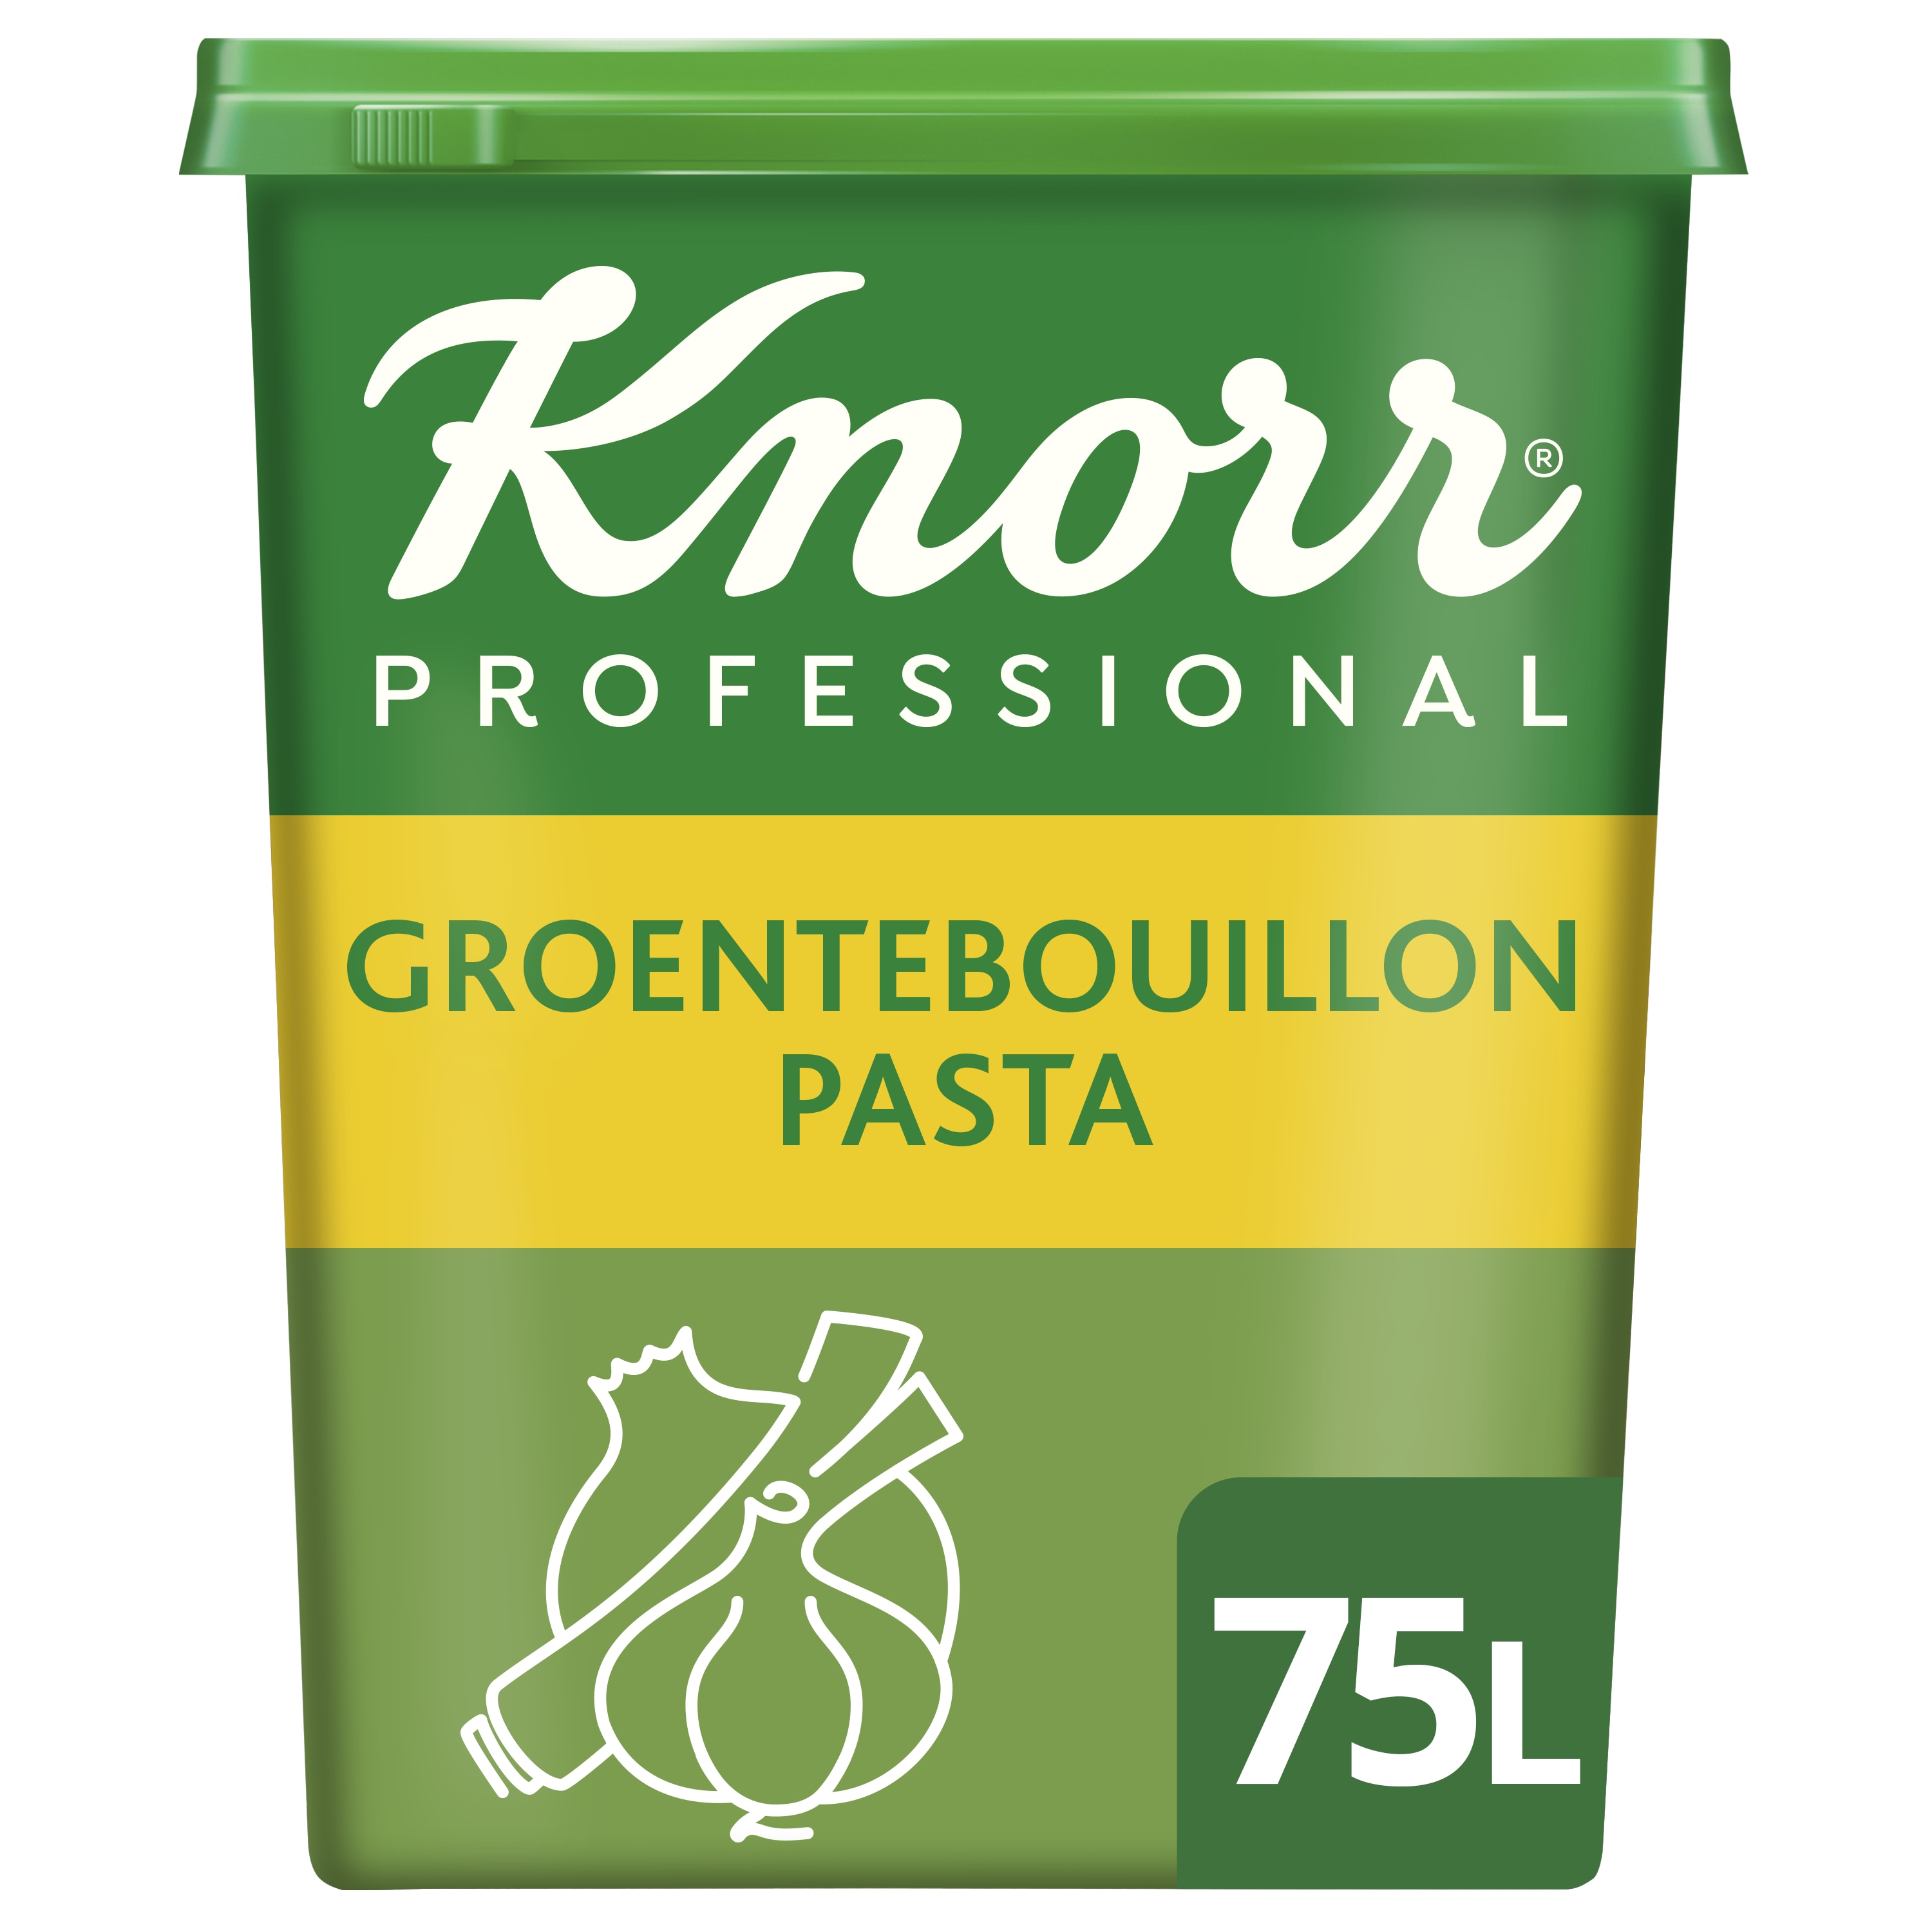 Knorr Professional Groentebouillon pasta opbrengst  75L - 